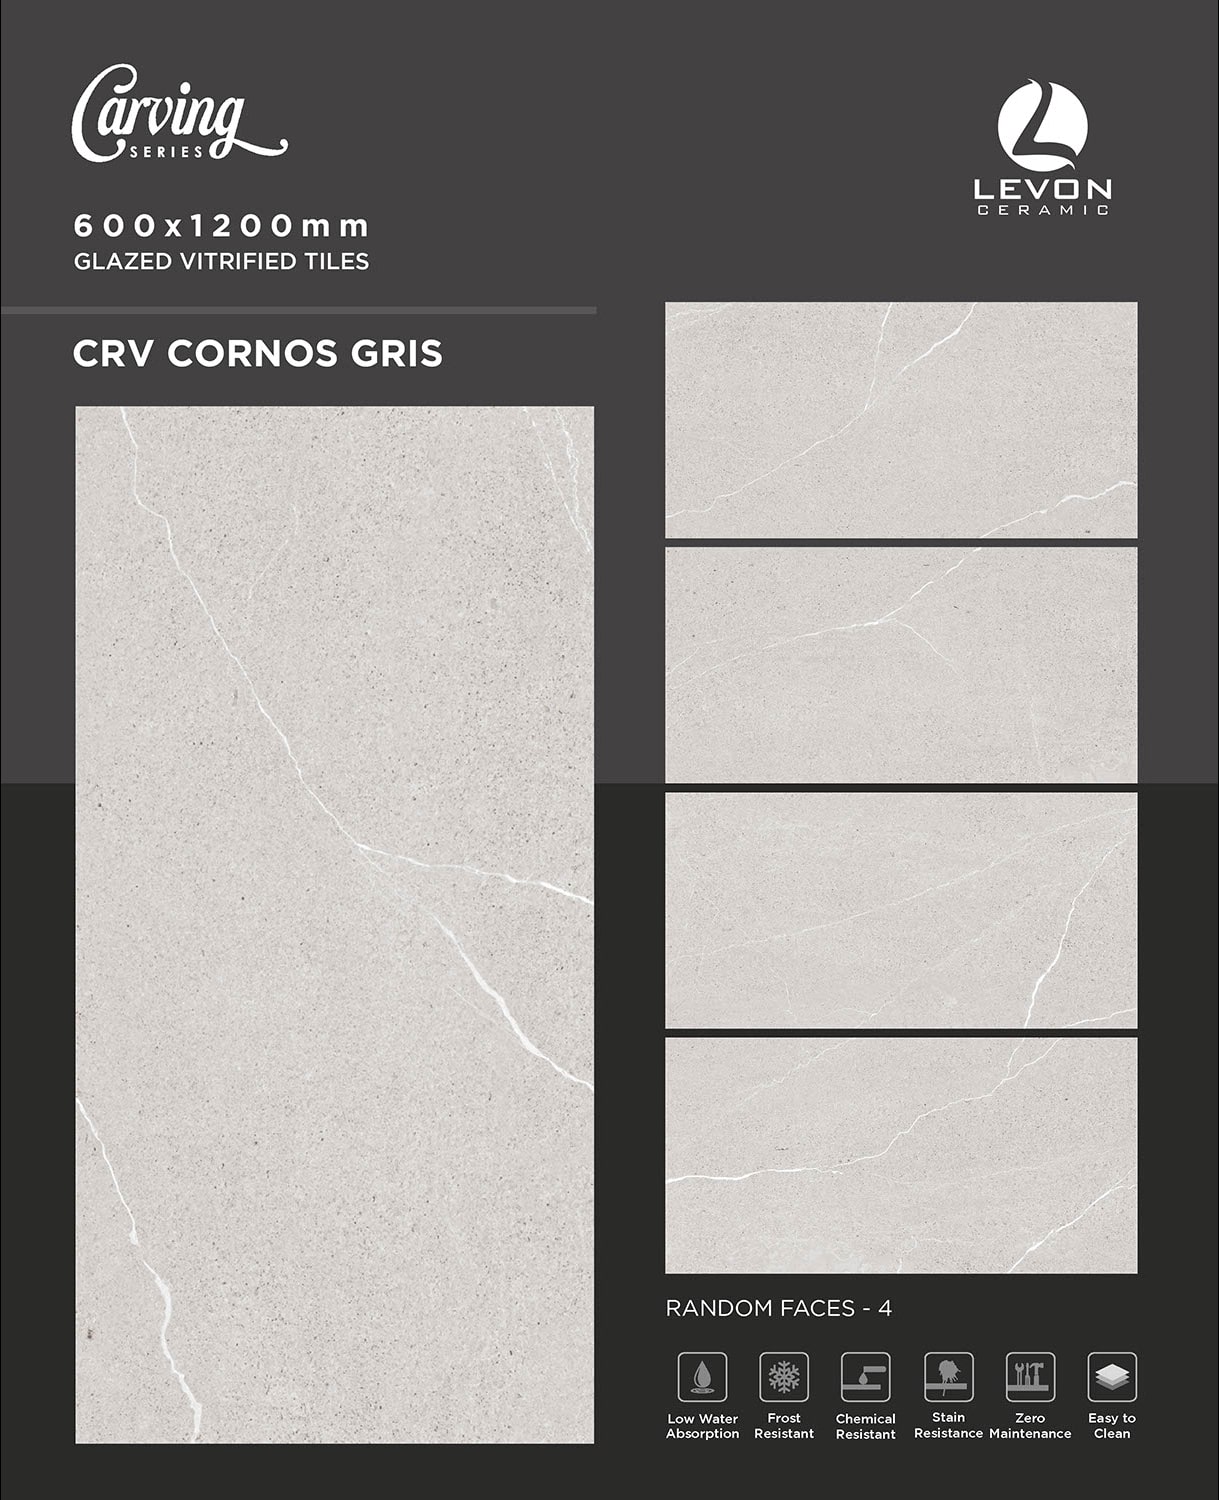 CRV CORNOS GRIS Product